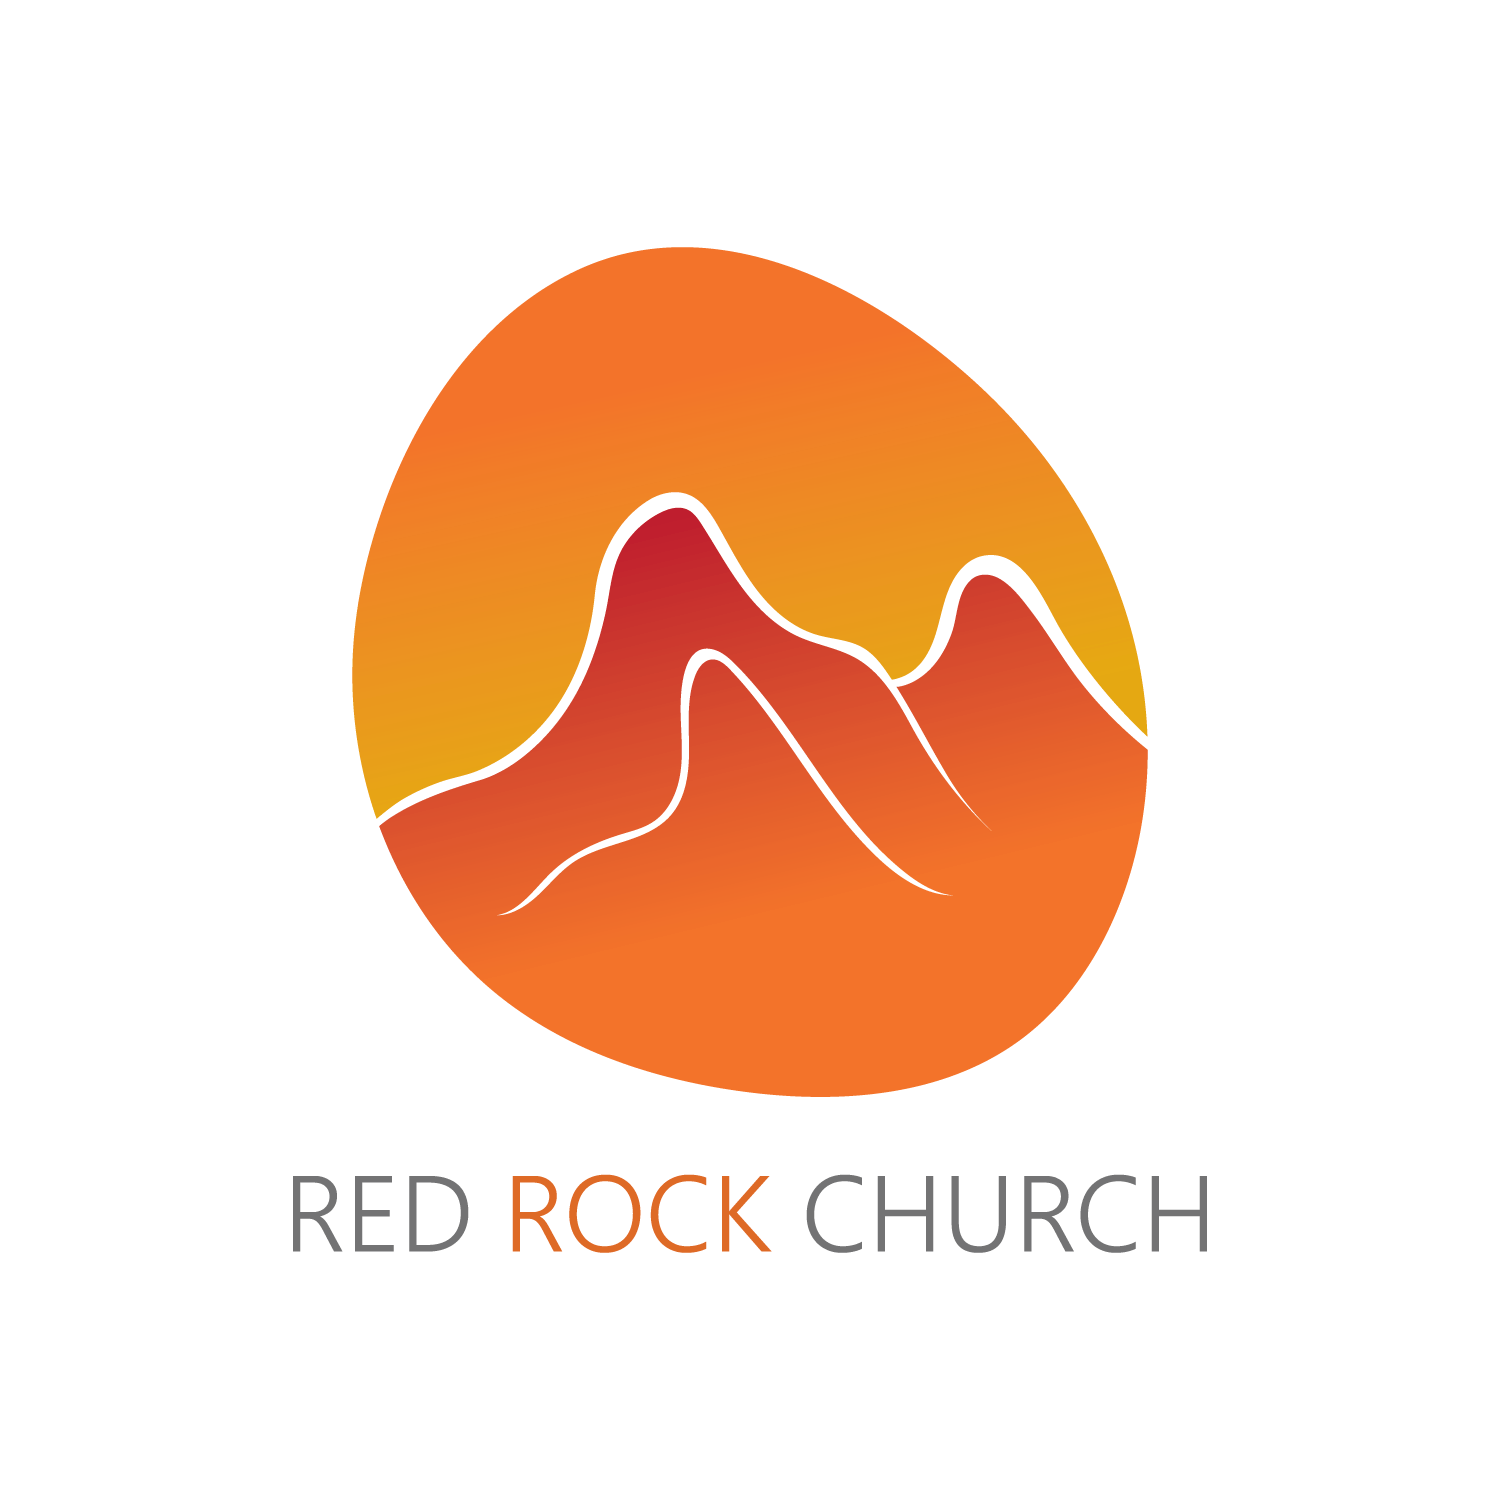 Red and Grey Church Logo - Modern, Bold, Church Logo Design for Red Rock Church by Zsófi